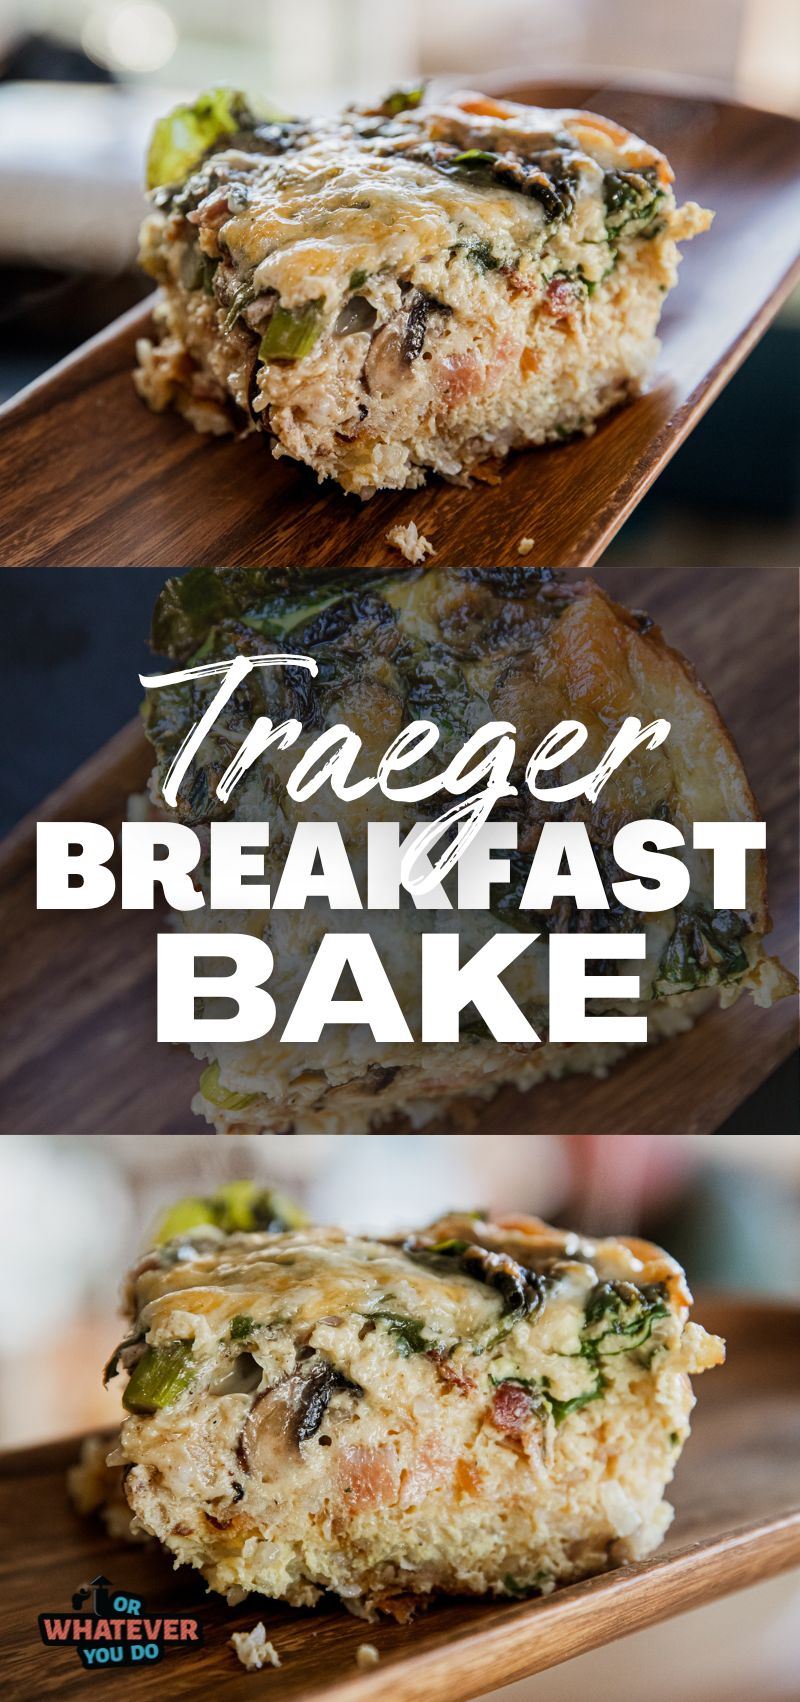 Traeger Breakfast Bake